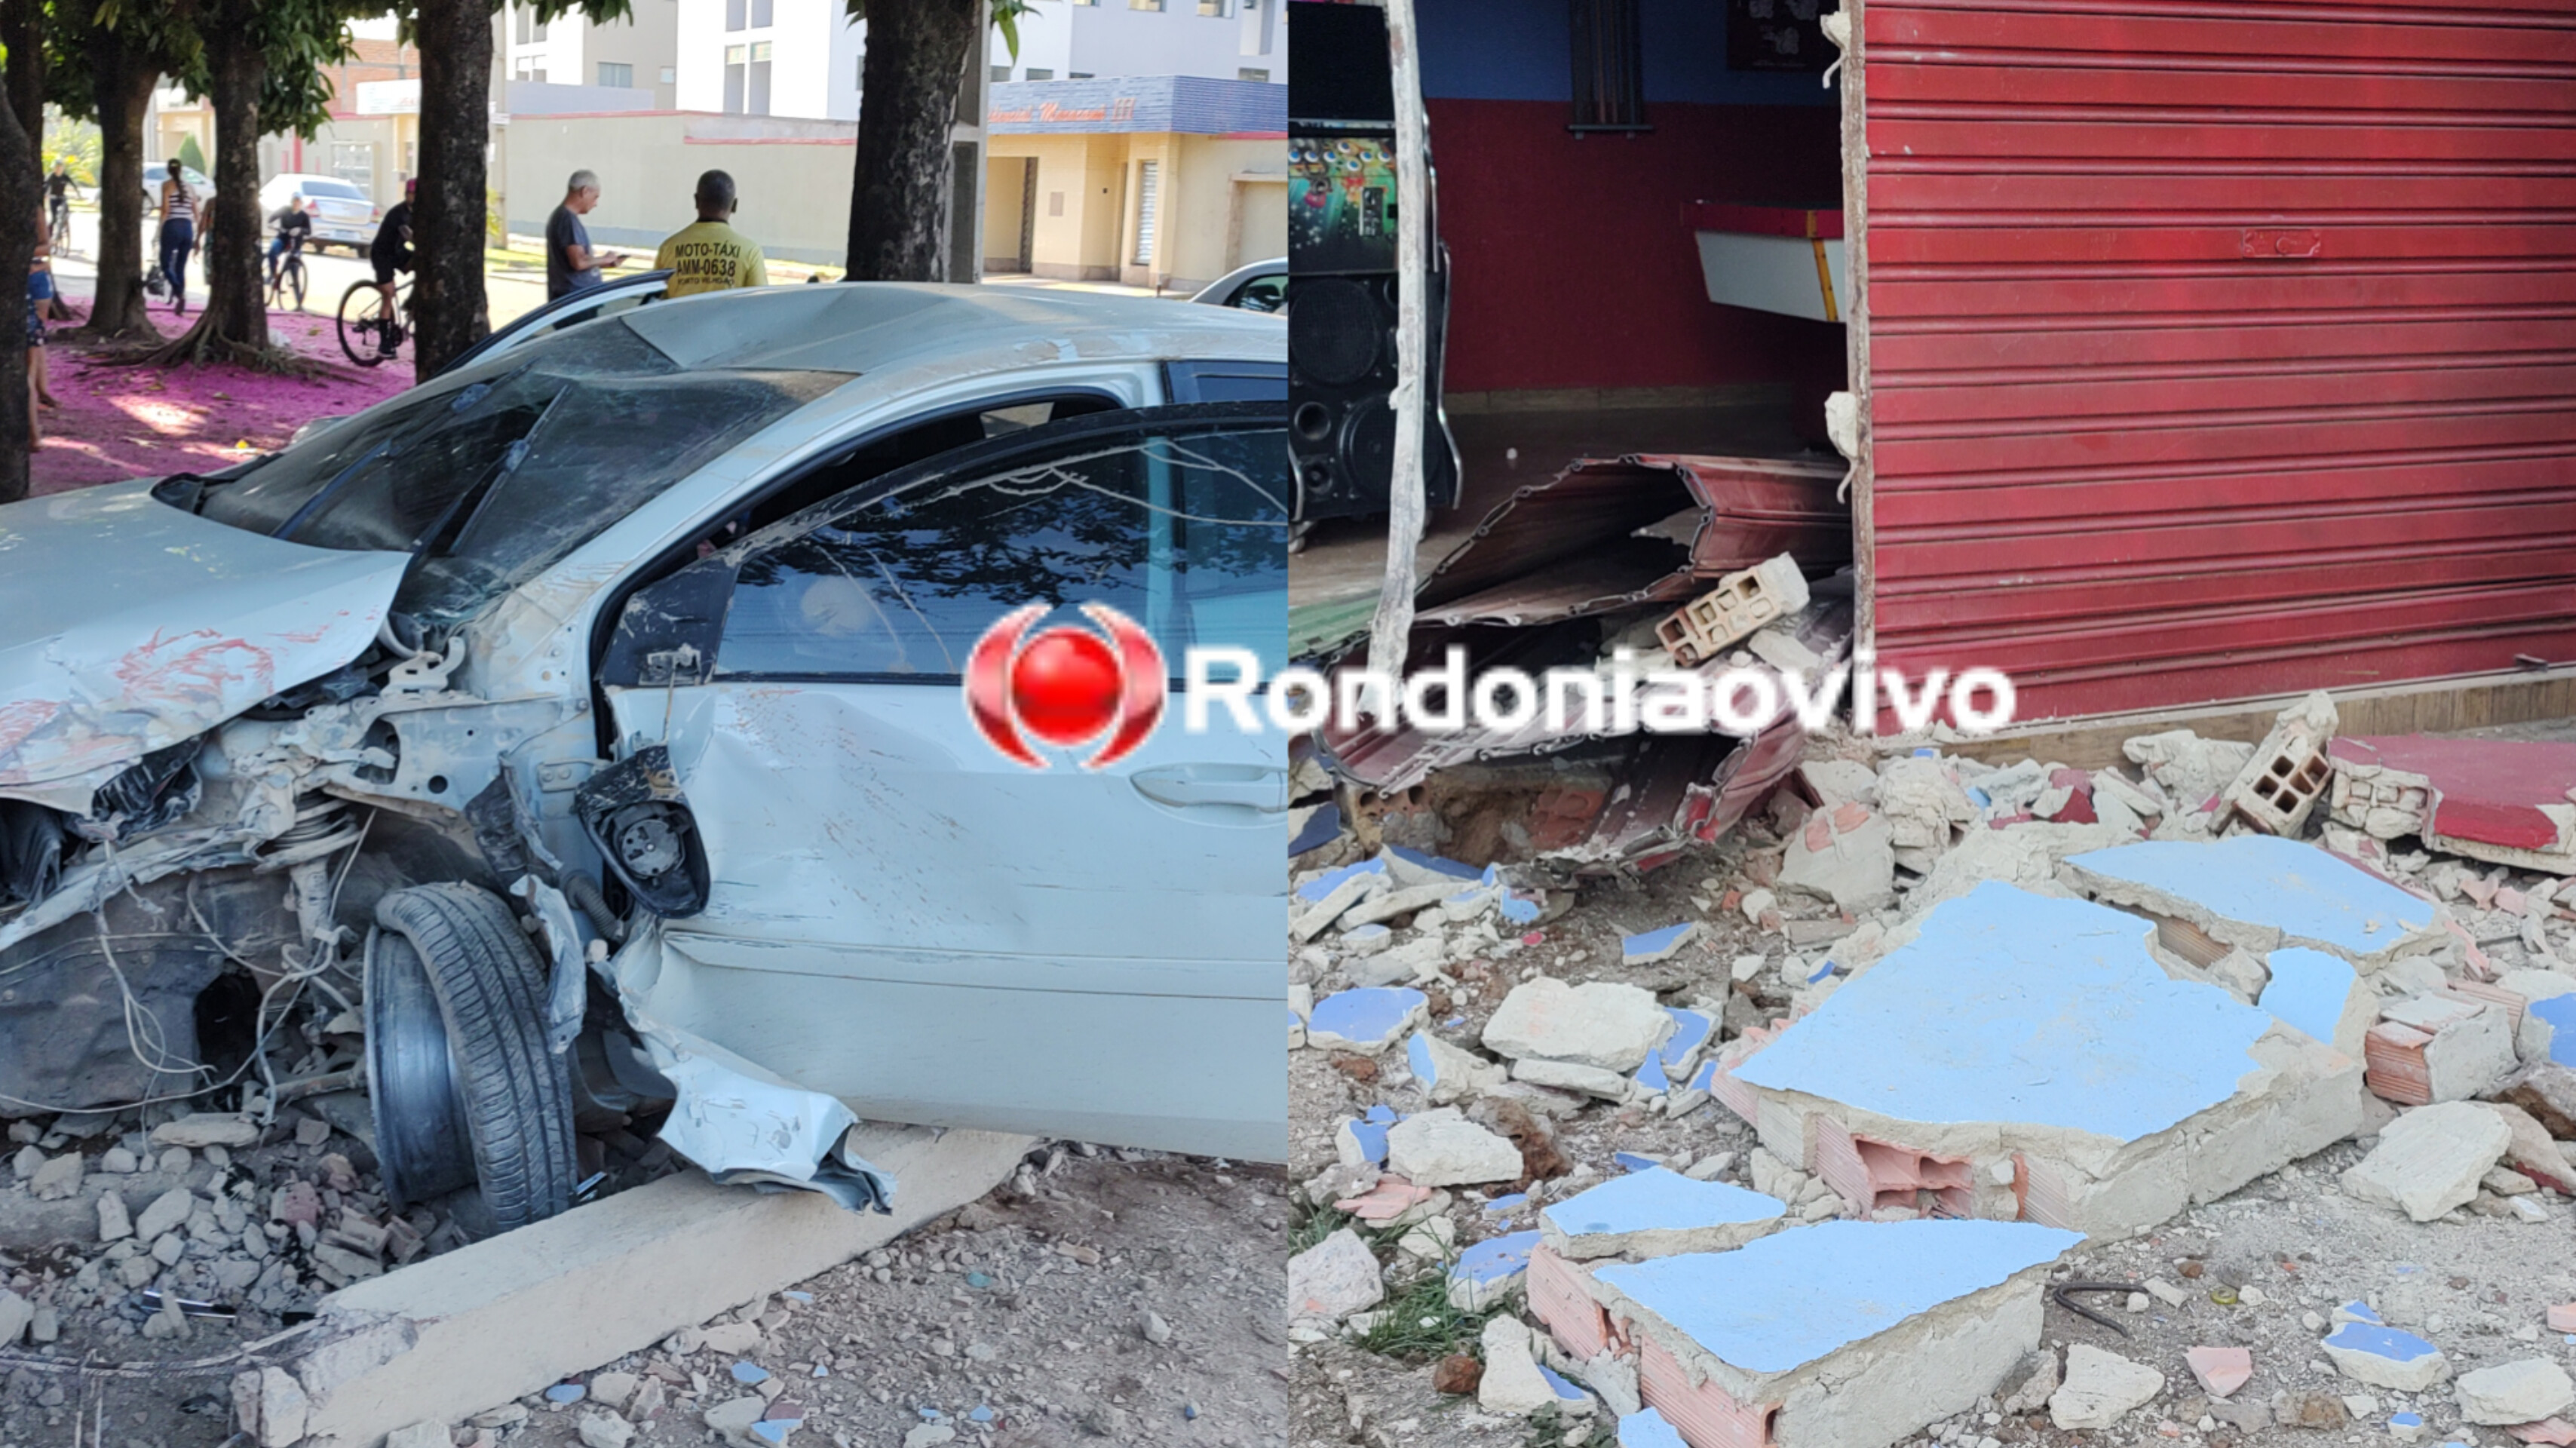 ESTRAGO: Embriagado, motorista de Corolla promove destruição na zona Leste 